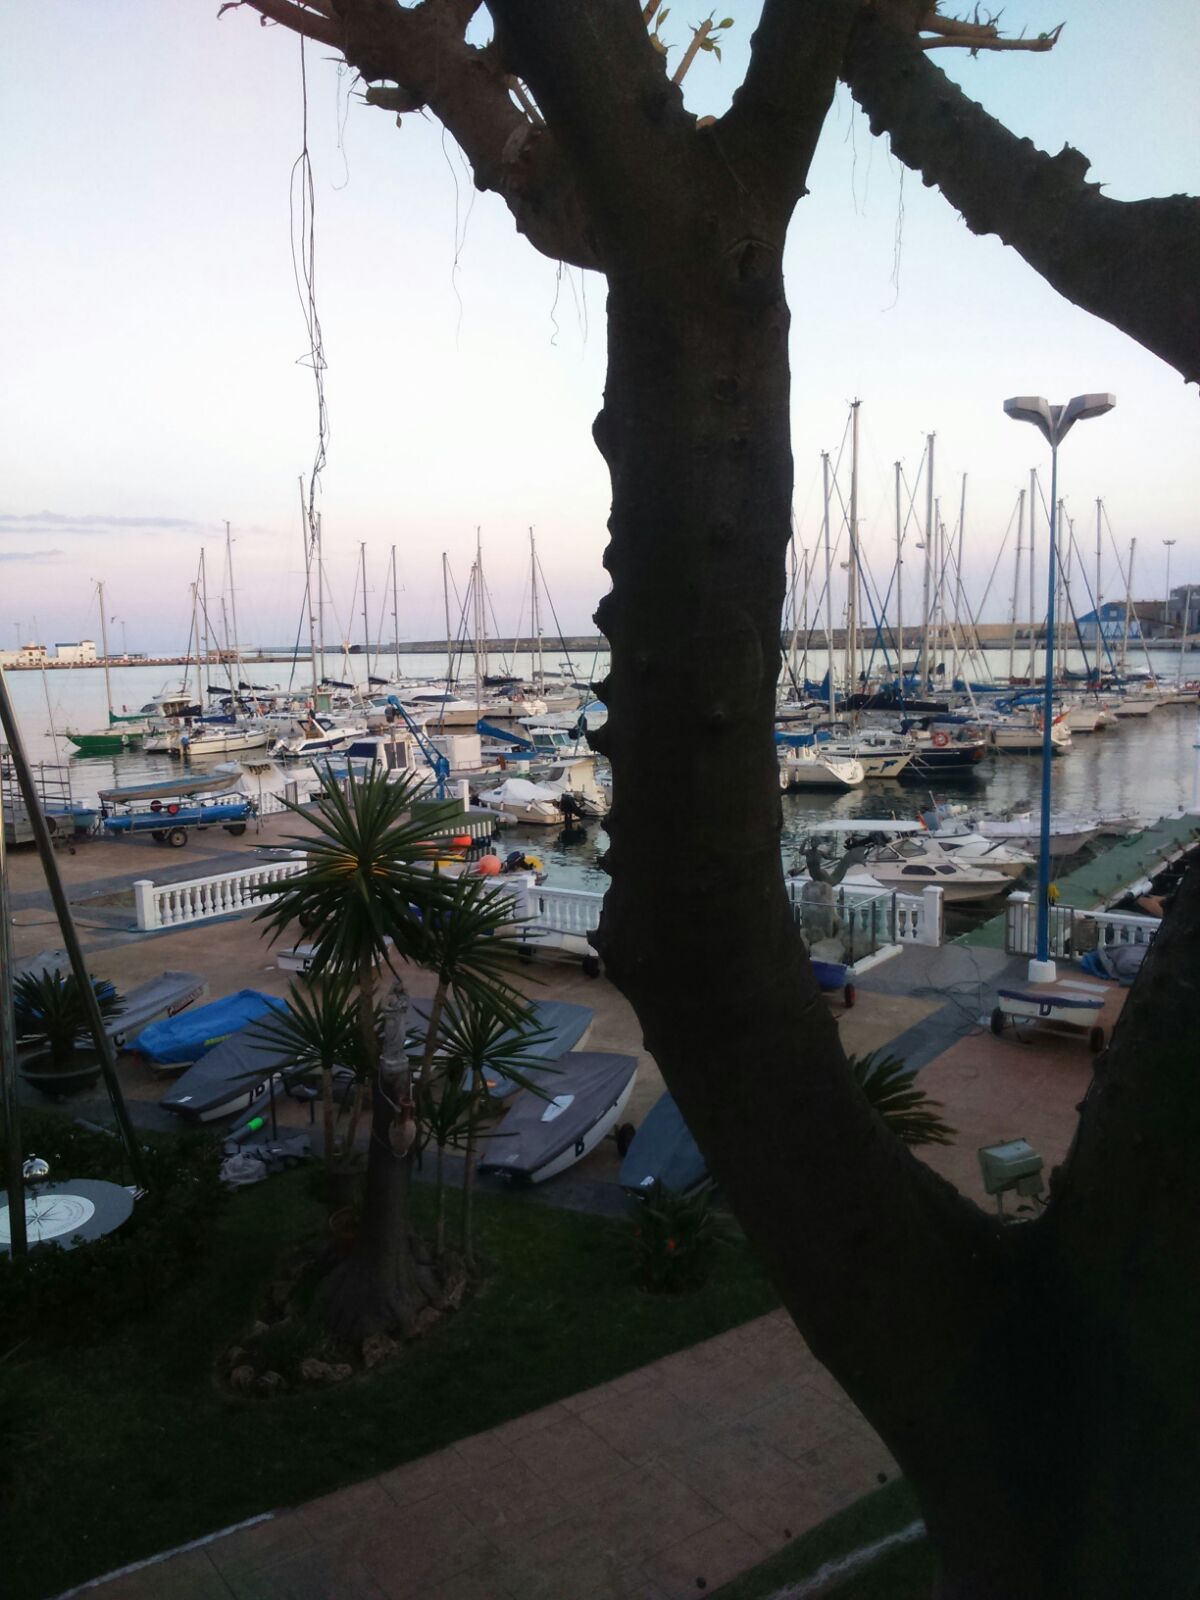 The port of Motril